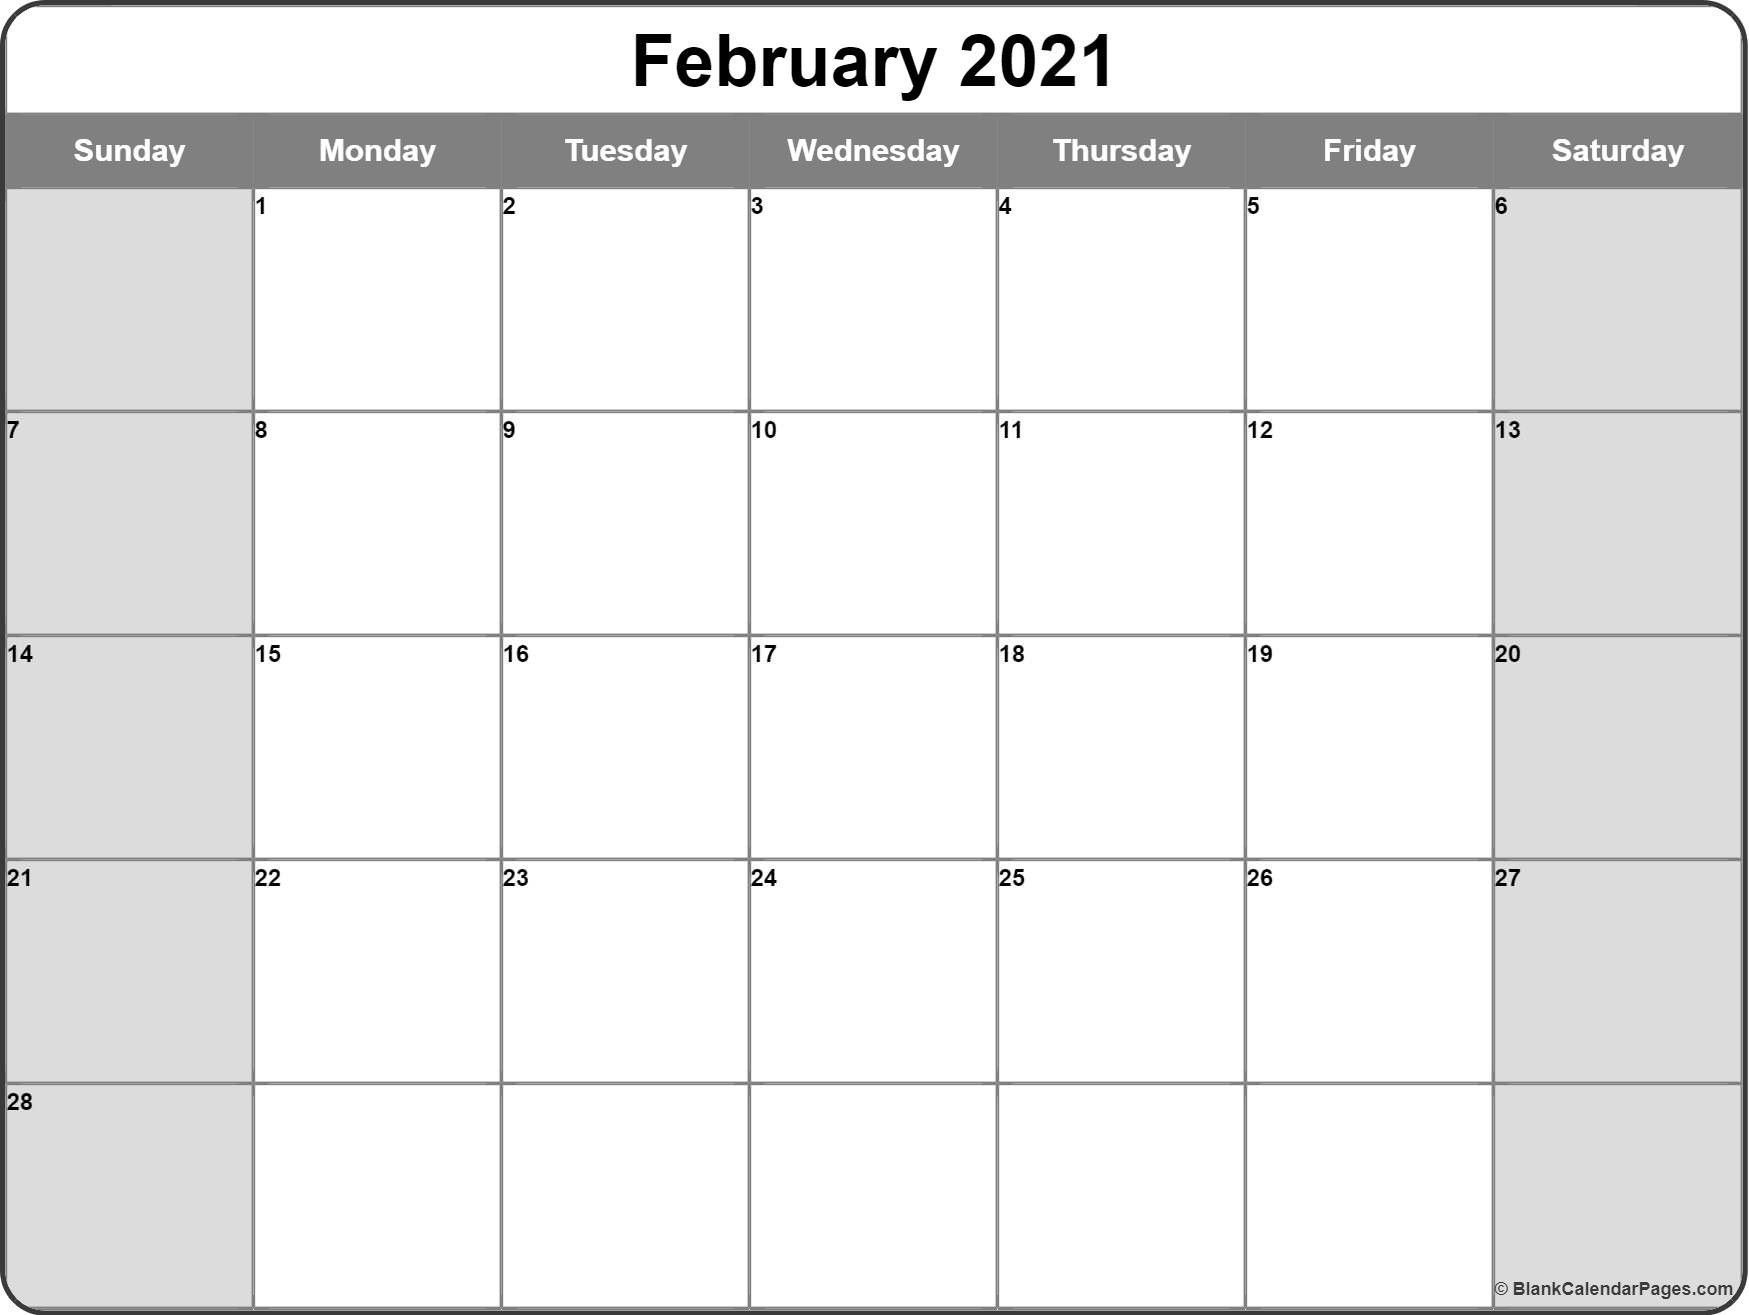 February 2021 Calendar Free Printable In 2020 | Calendar